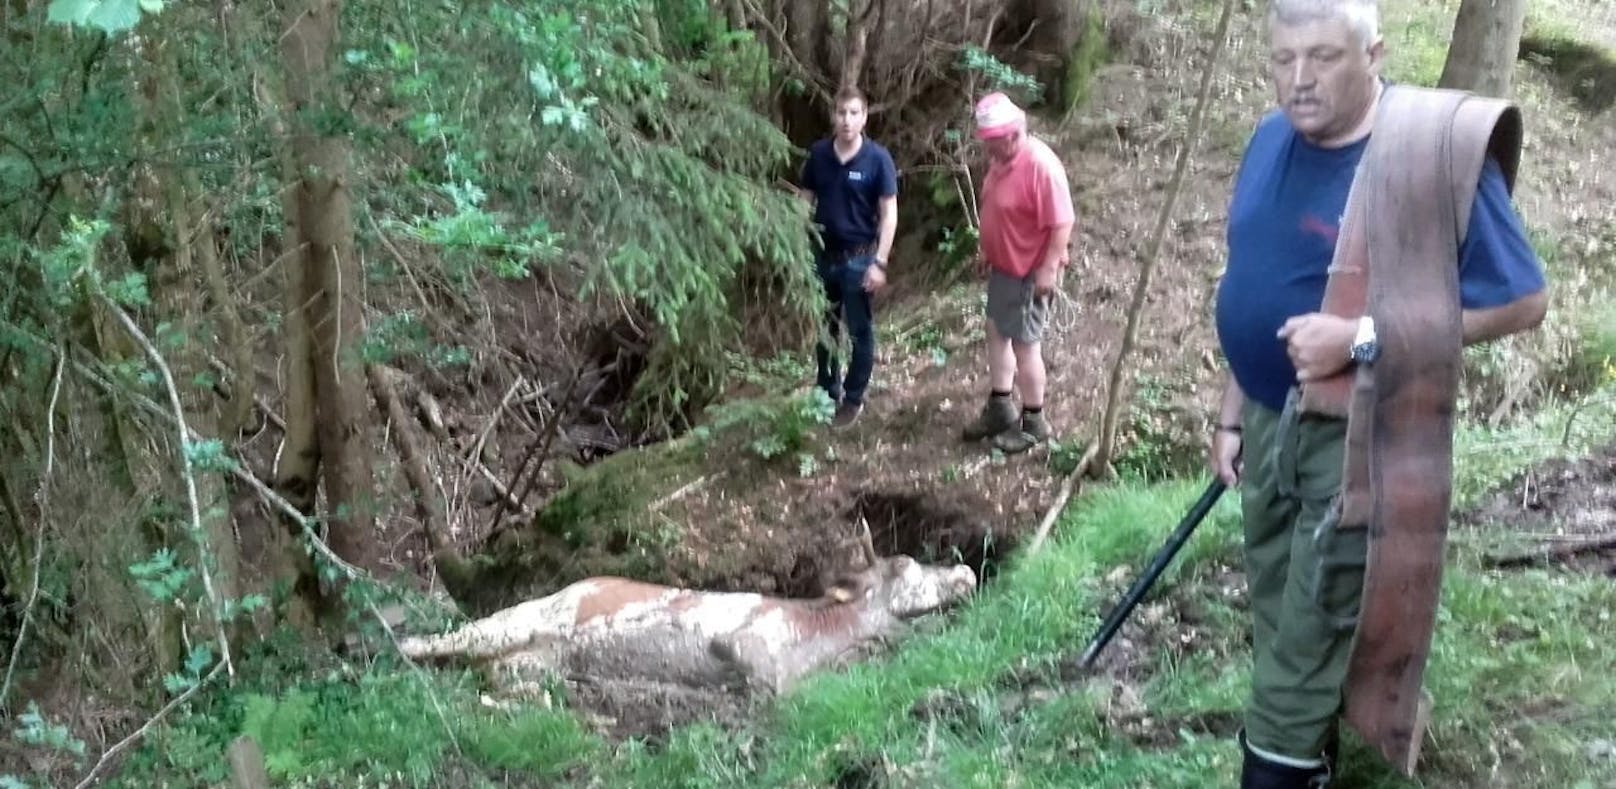 Tierdrama in Lilienfeld: Kuh steckte im Sumpf fest